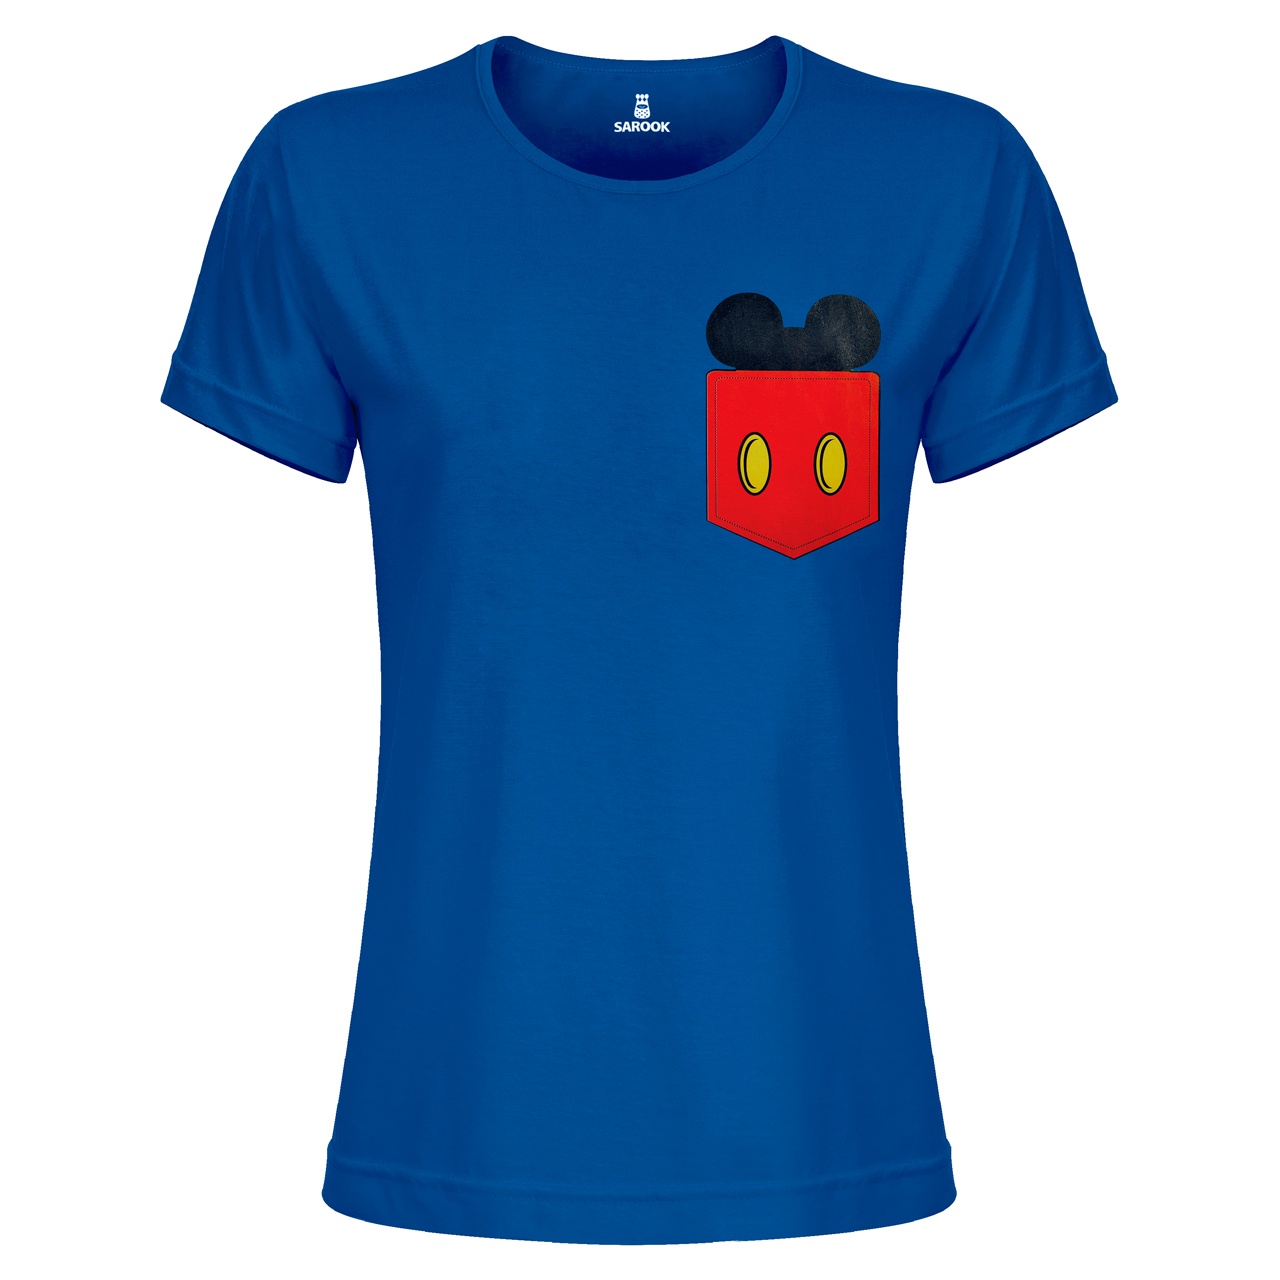 تی شرت زنانه ساروک مدل TZYUYRCH-Mickey 04 رنگ آبی کاربنی